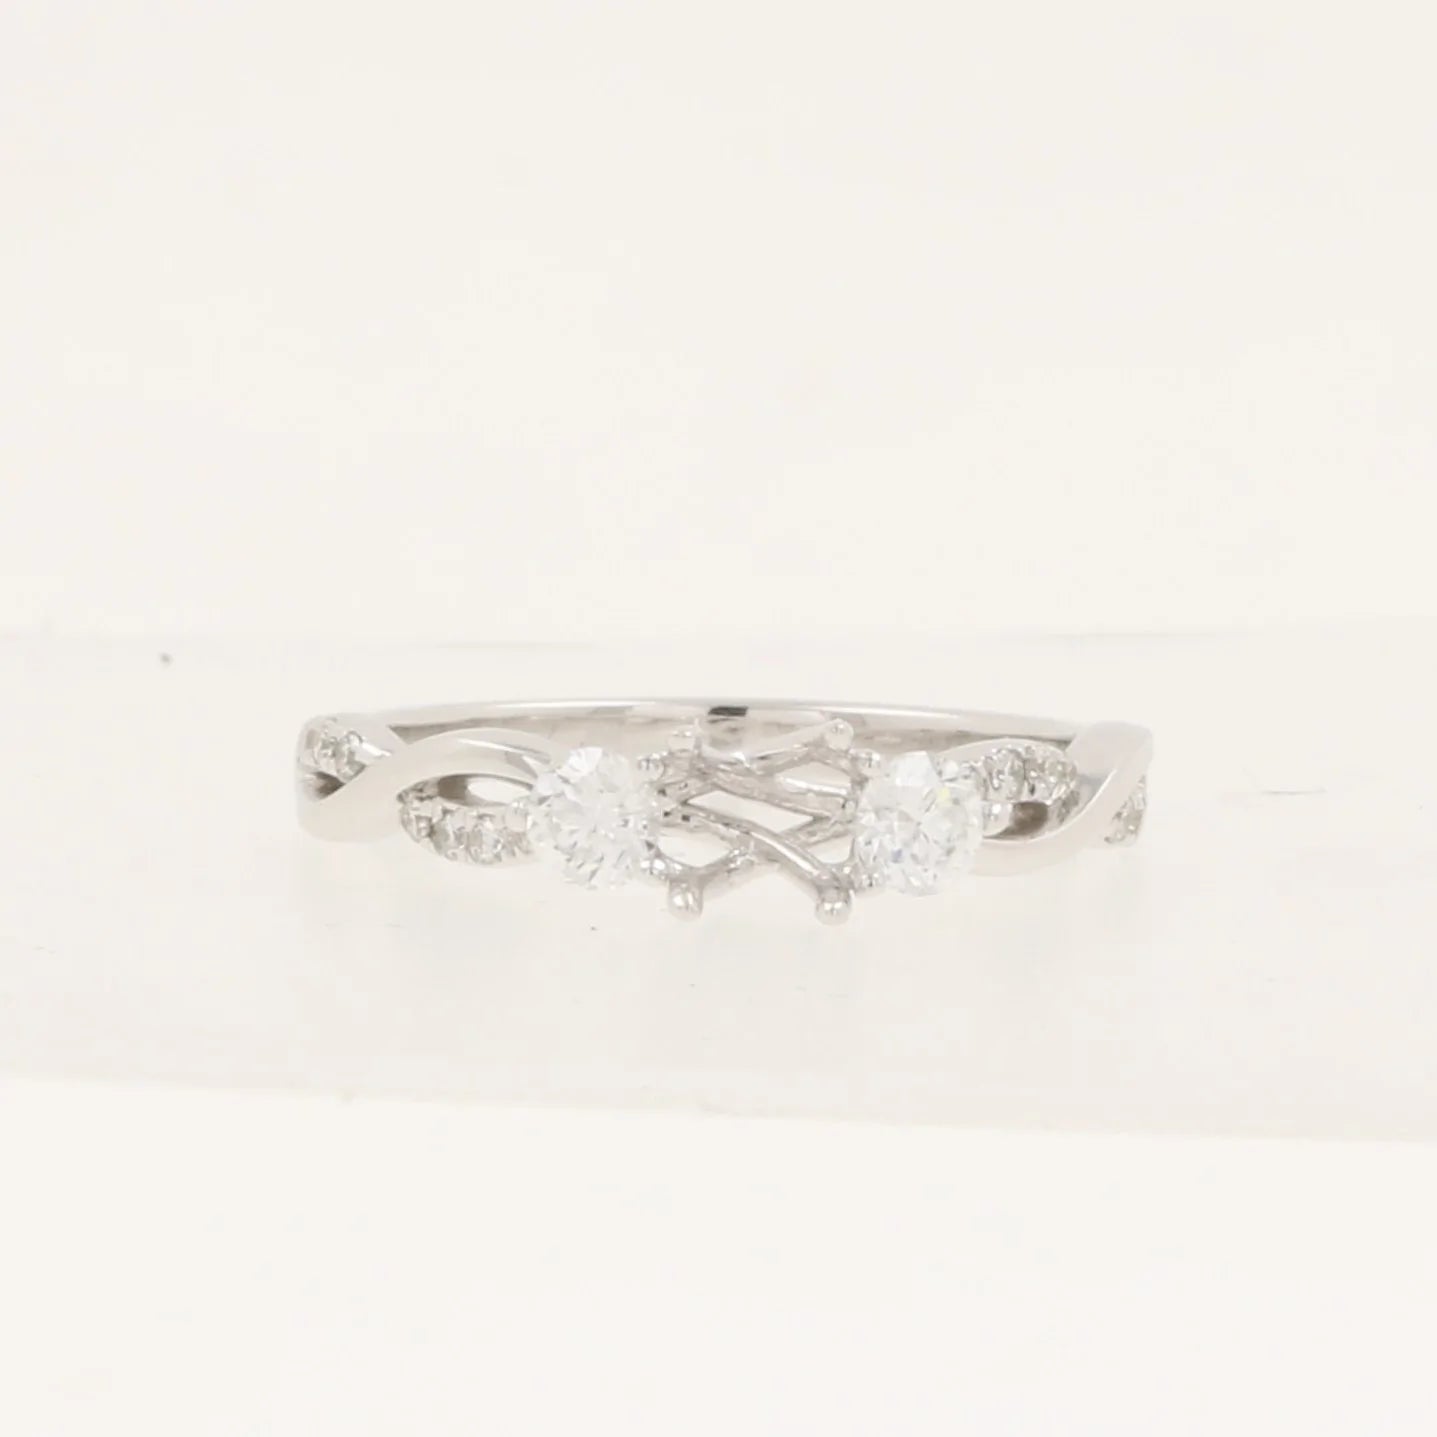 15963ER Ring With Diamond